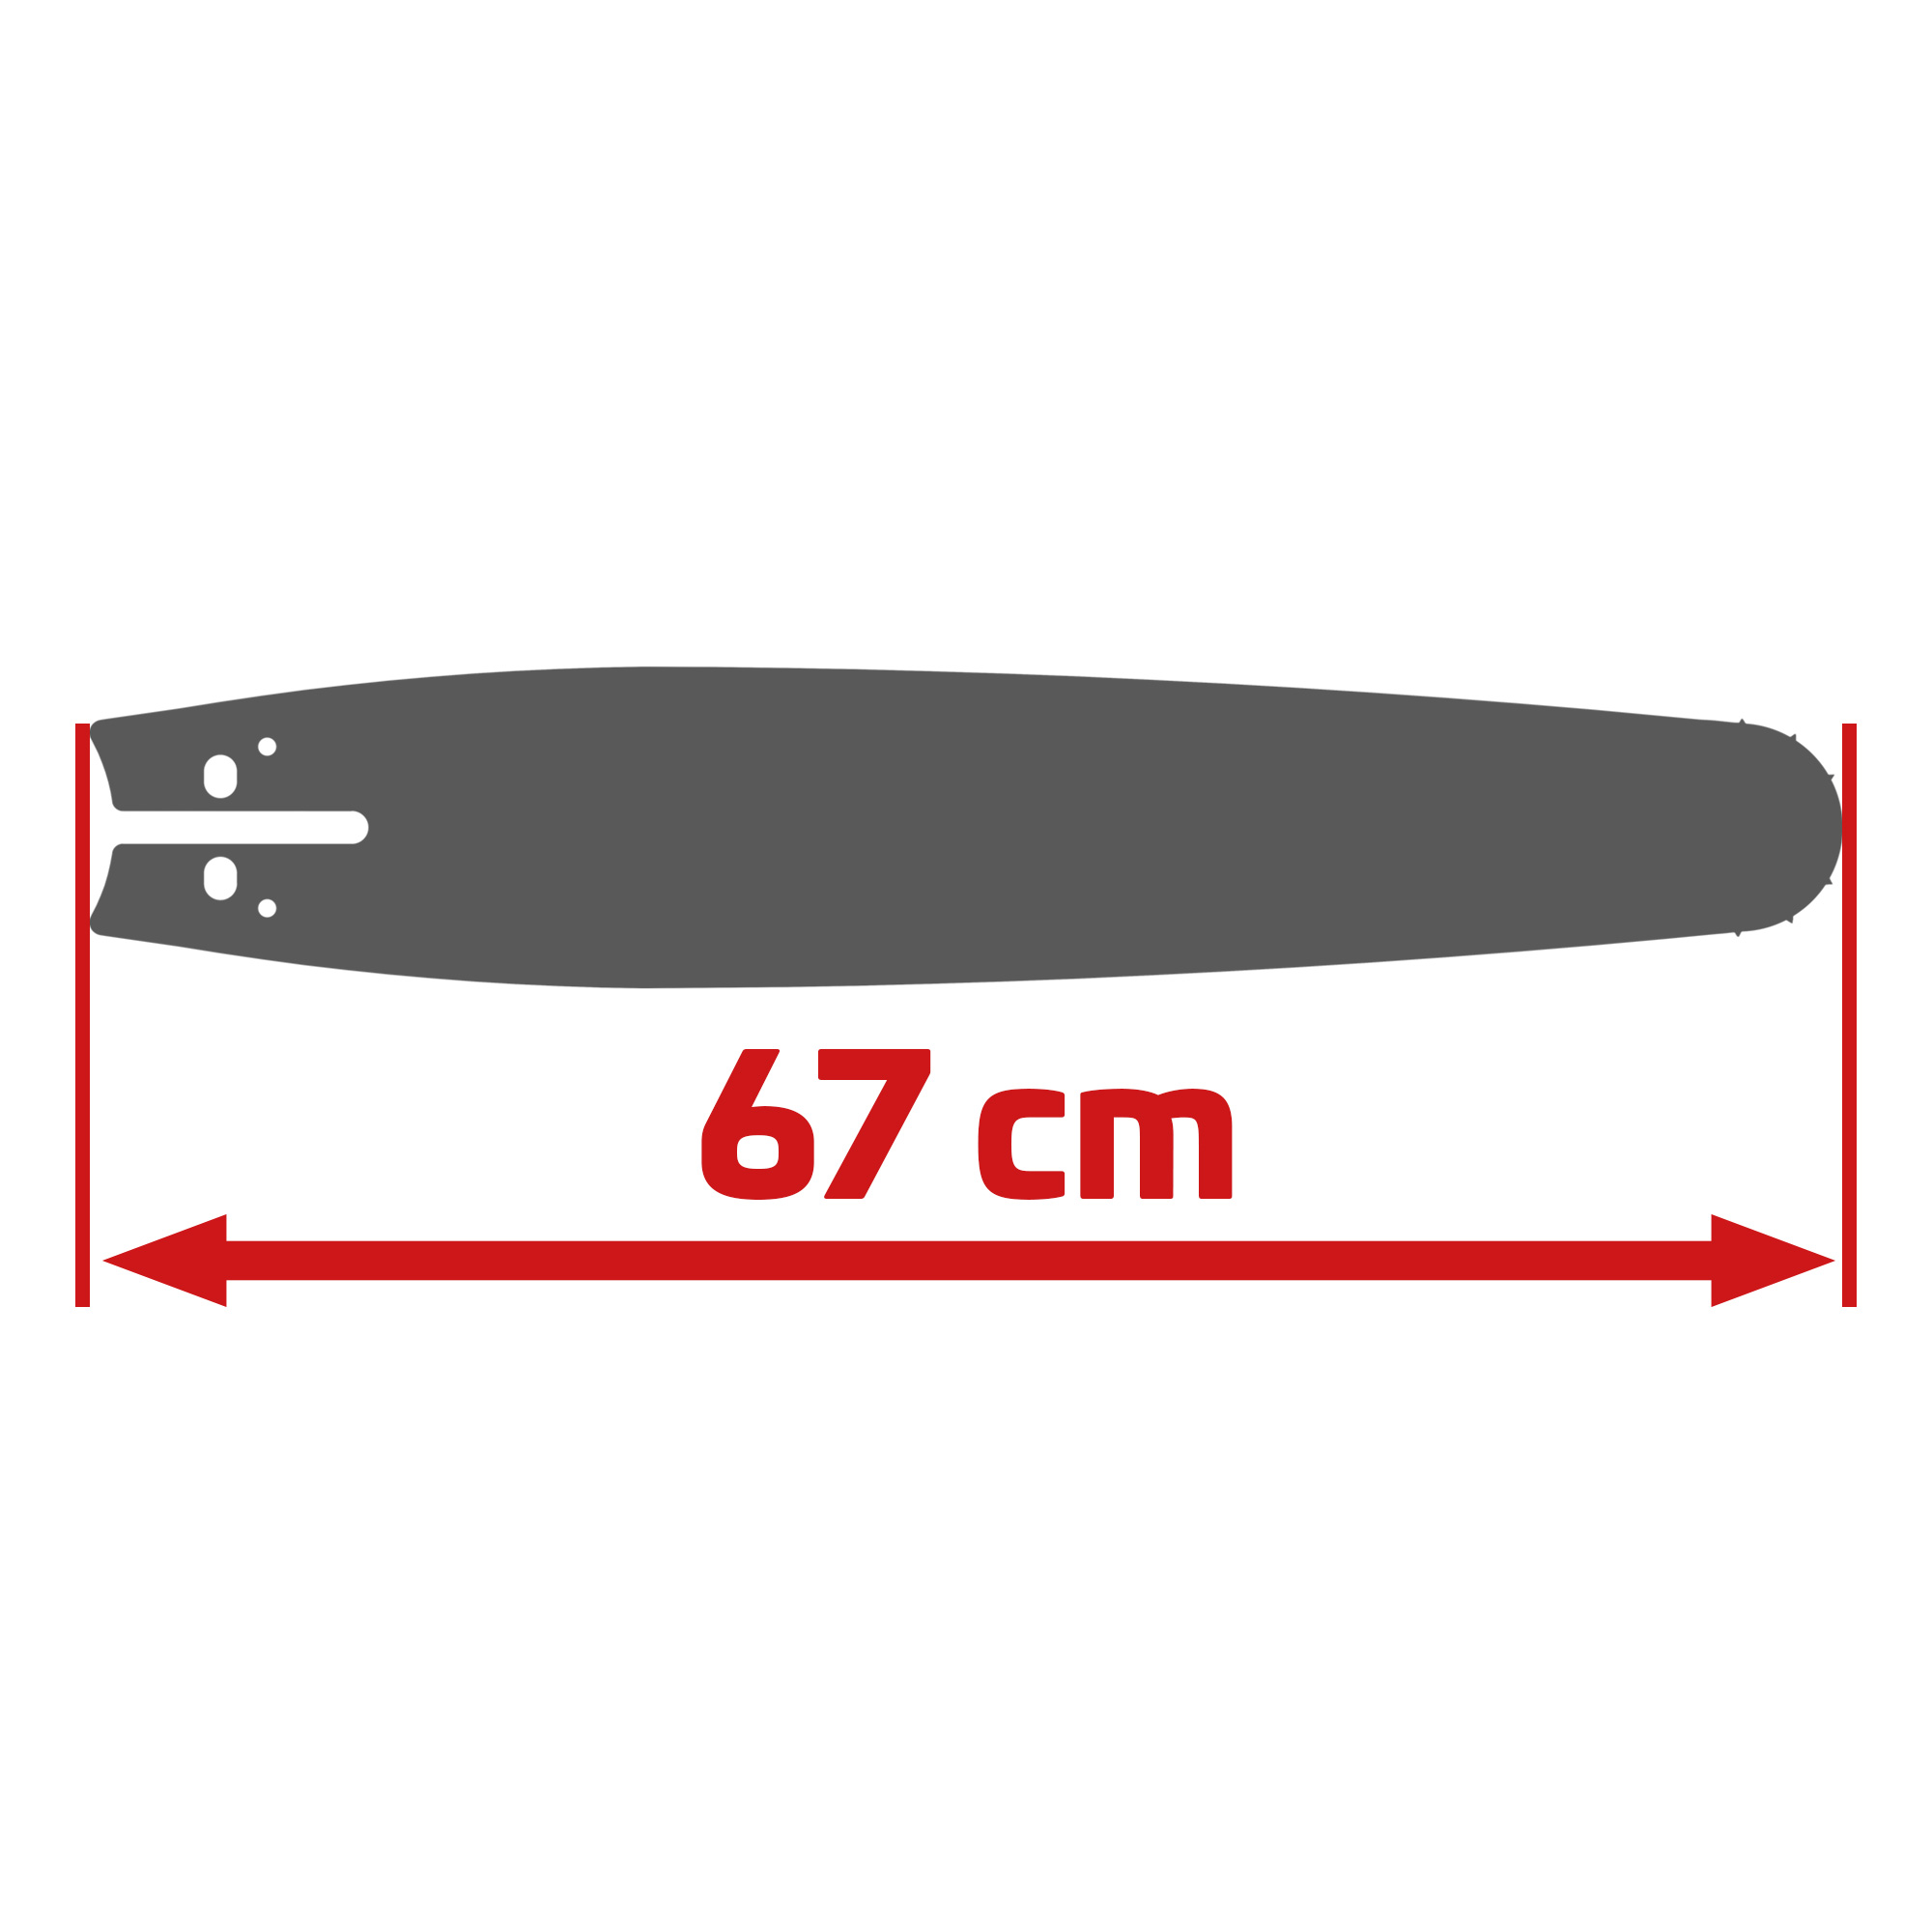 Bar length length 67 cm